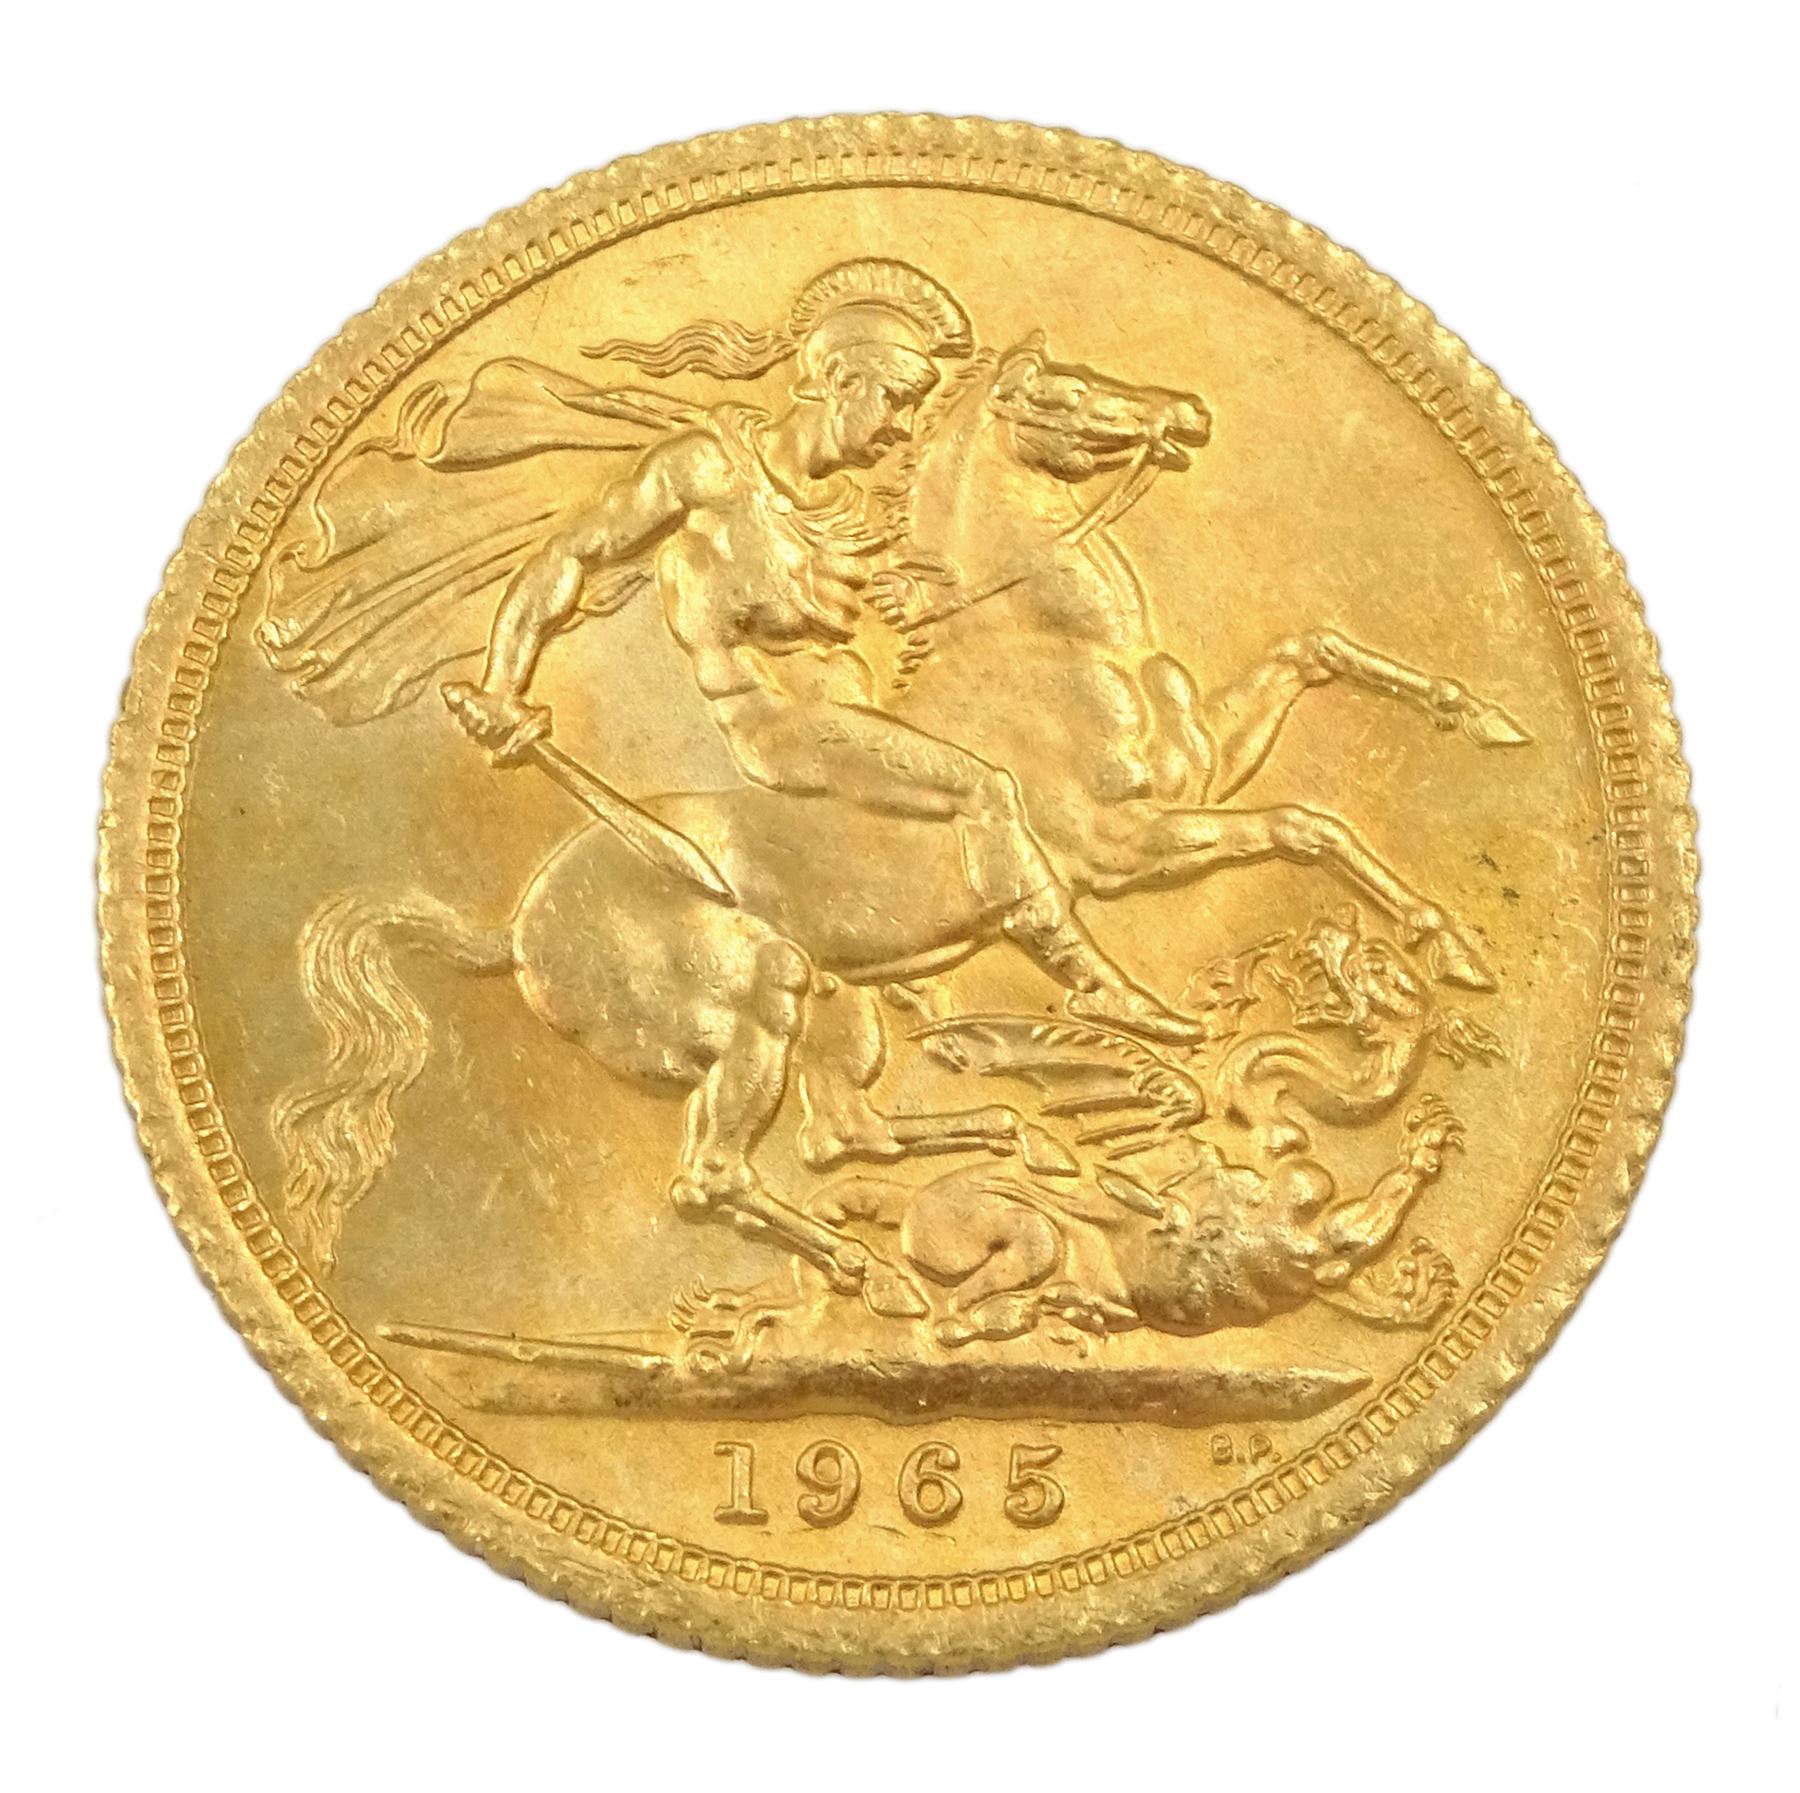 Queen Elizabeth II 1965 gold full sovereign coin - Image 3 of 3